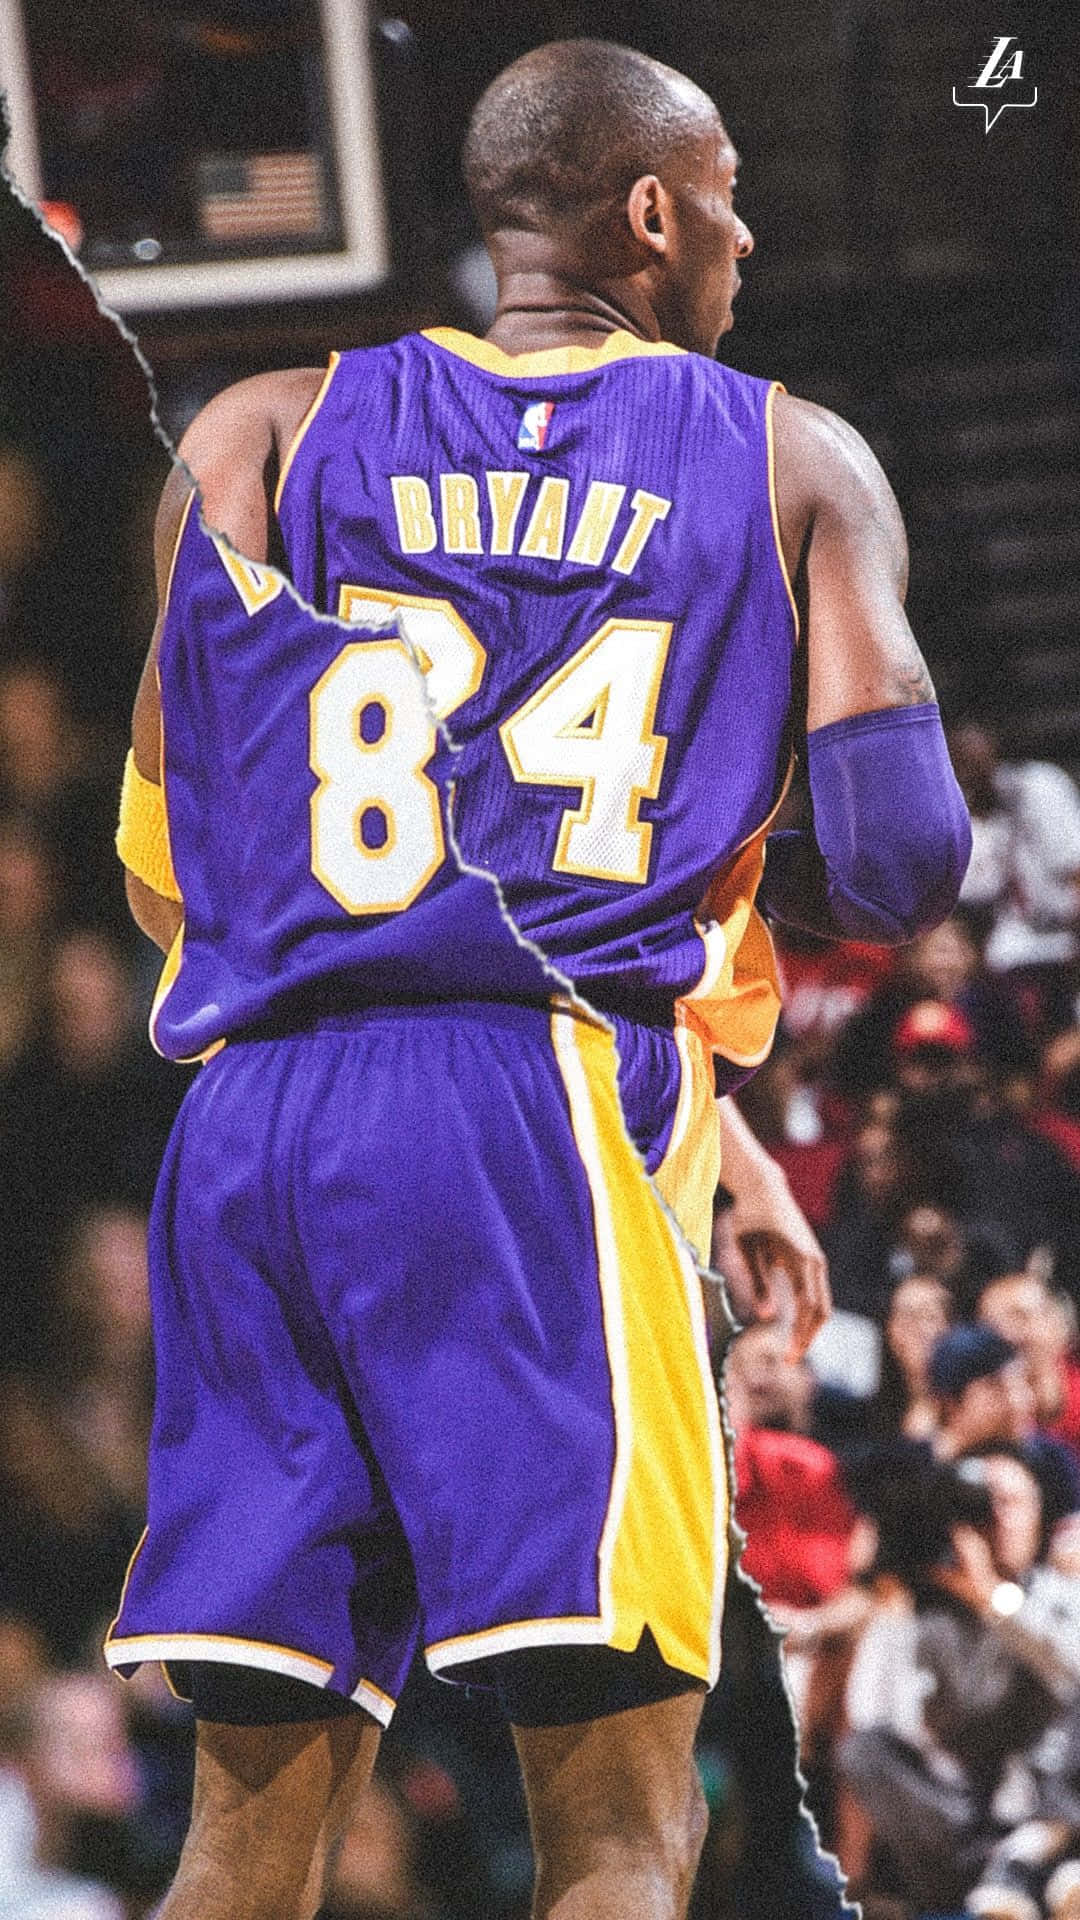 Download Kobe Bryant - the King of Basketball Wallpaper | Wallpapers.com